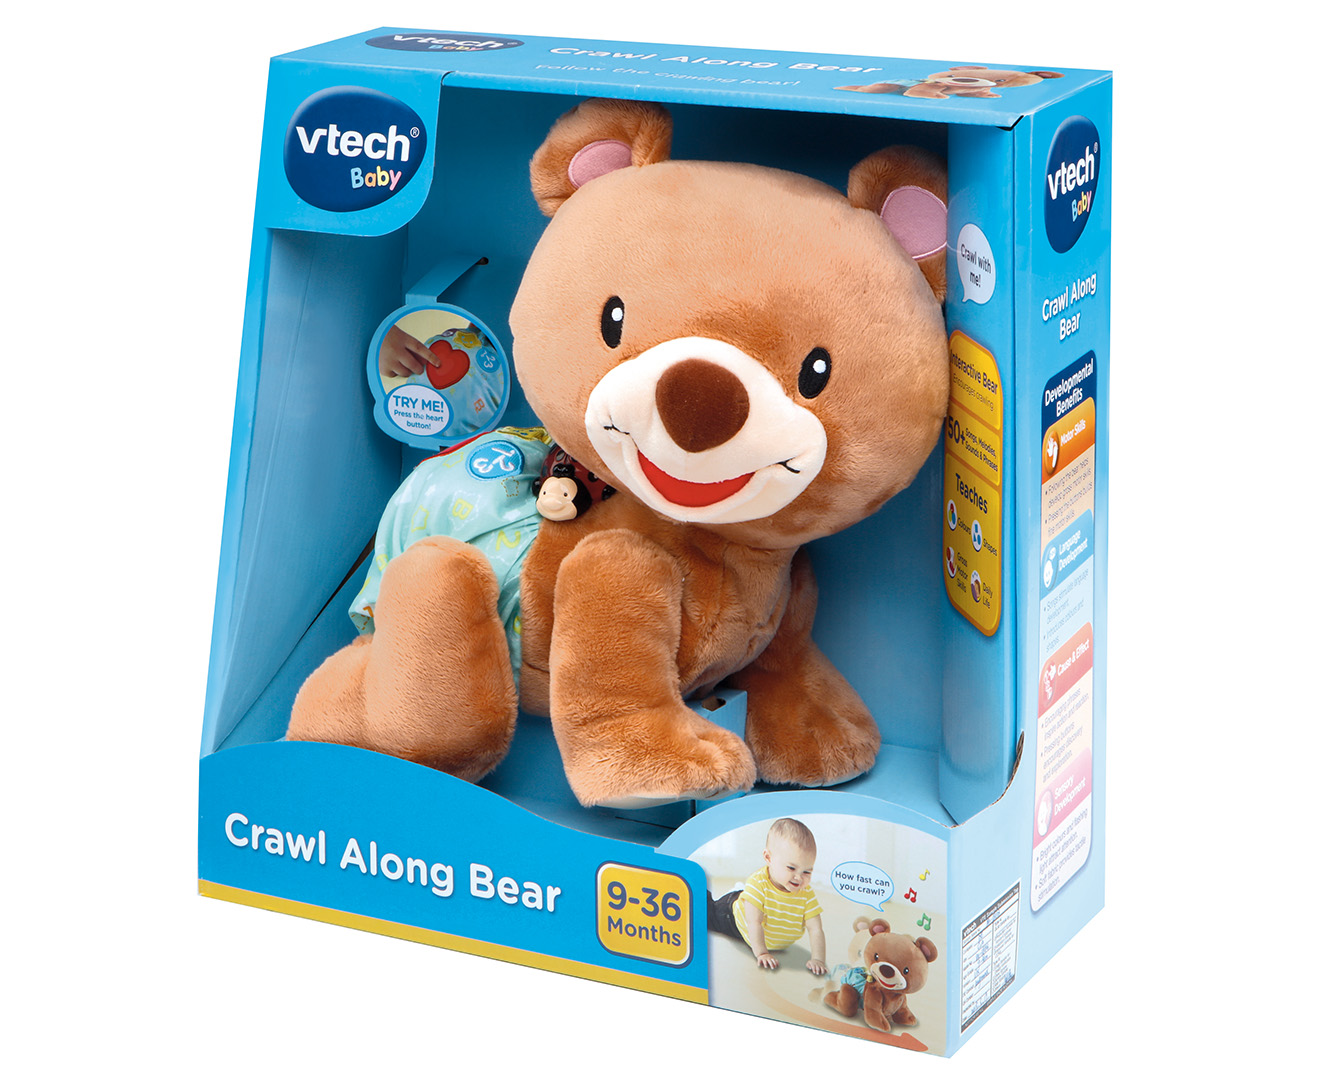 vtech crawl along bear kmart Cheap Toys 